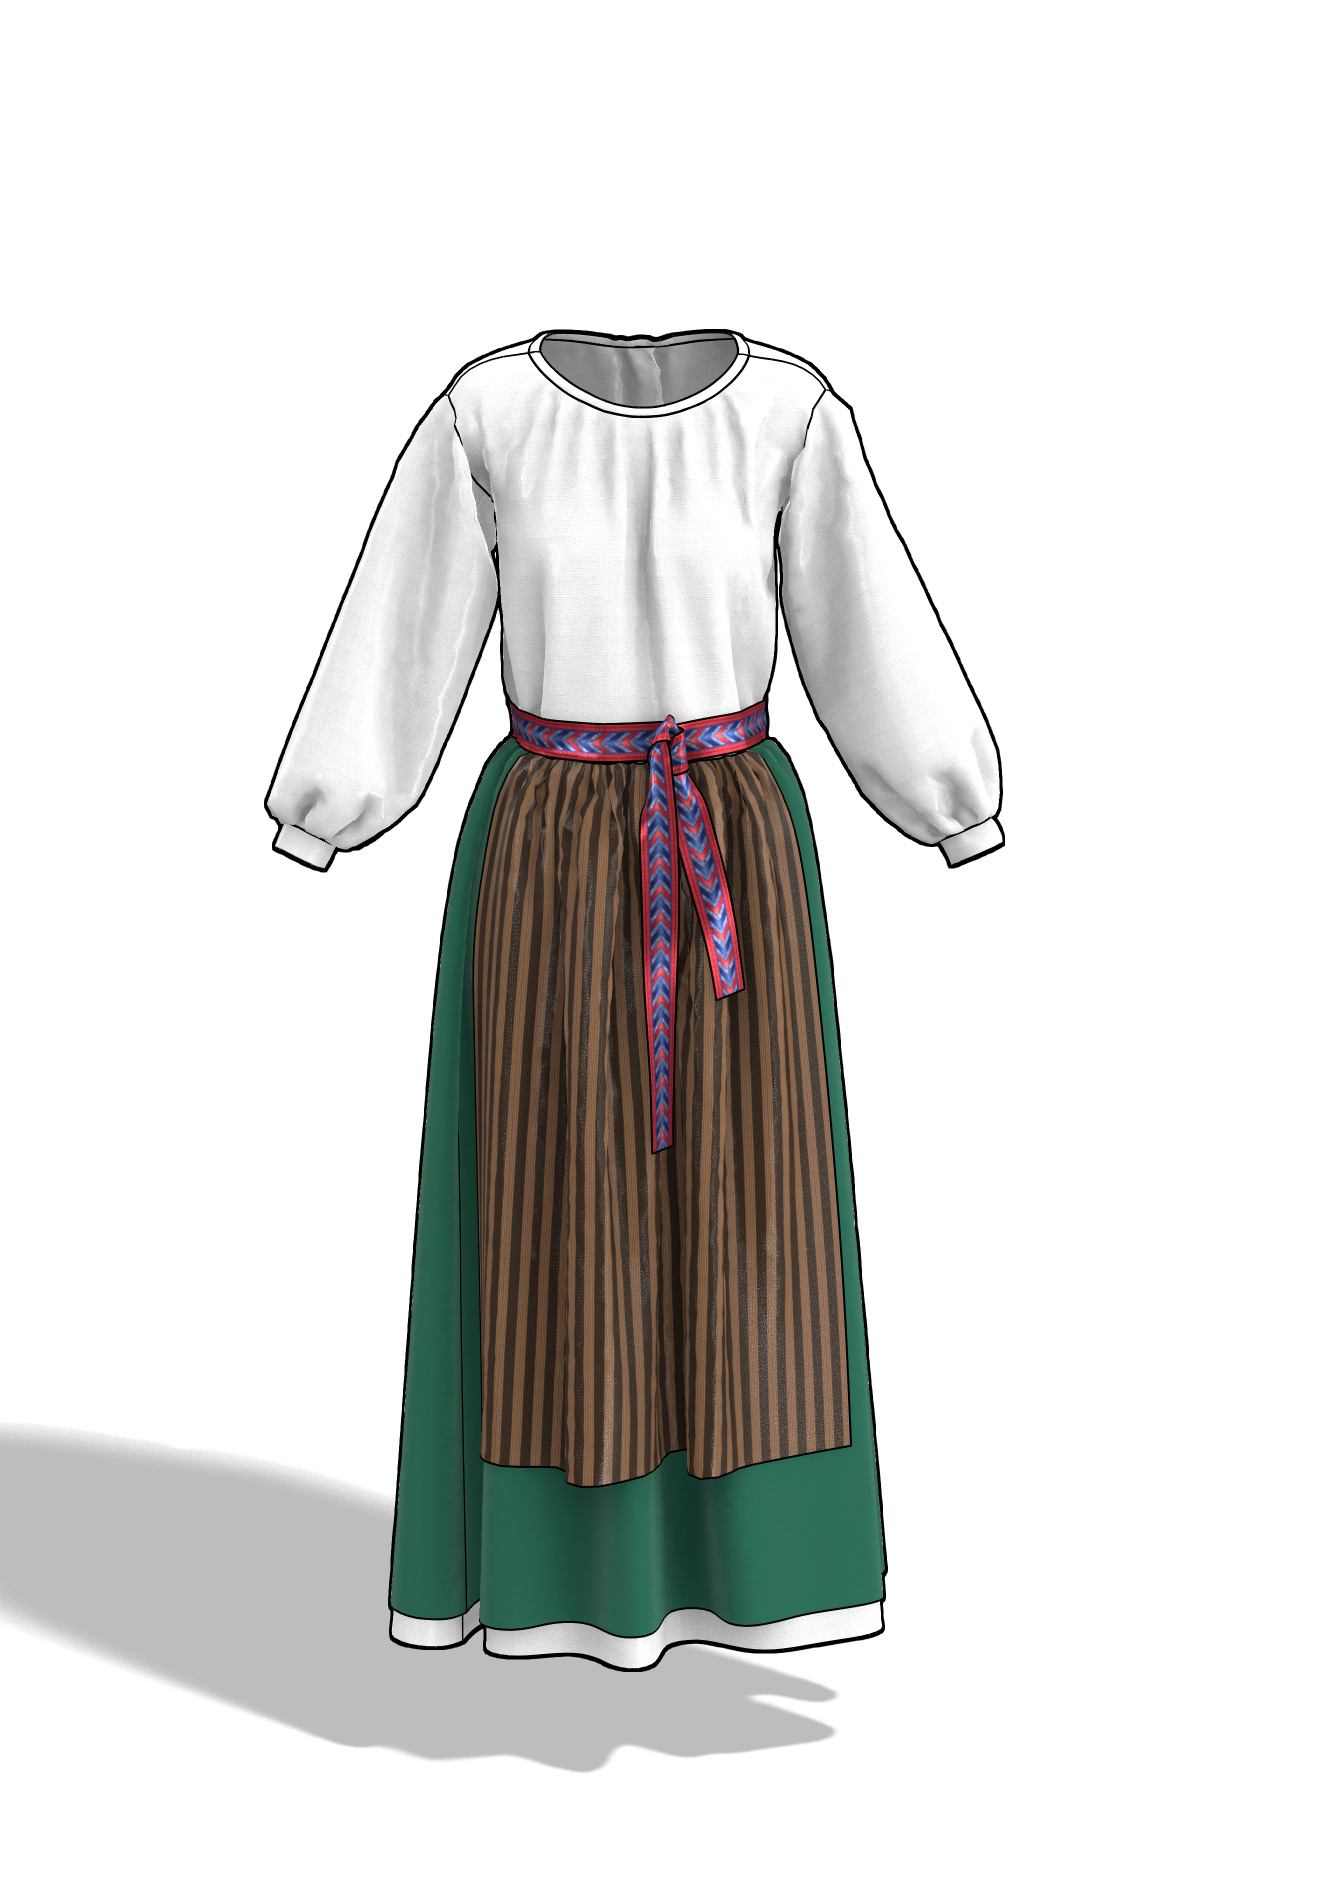 Визуализация и реконструкция костюма поволжских немцев. 130